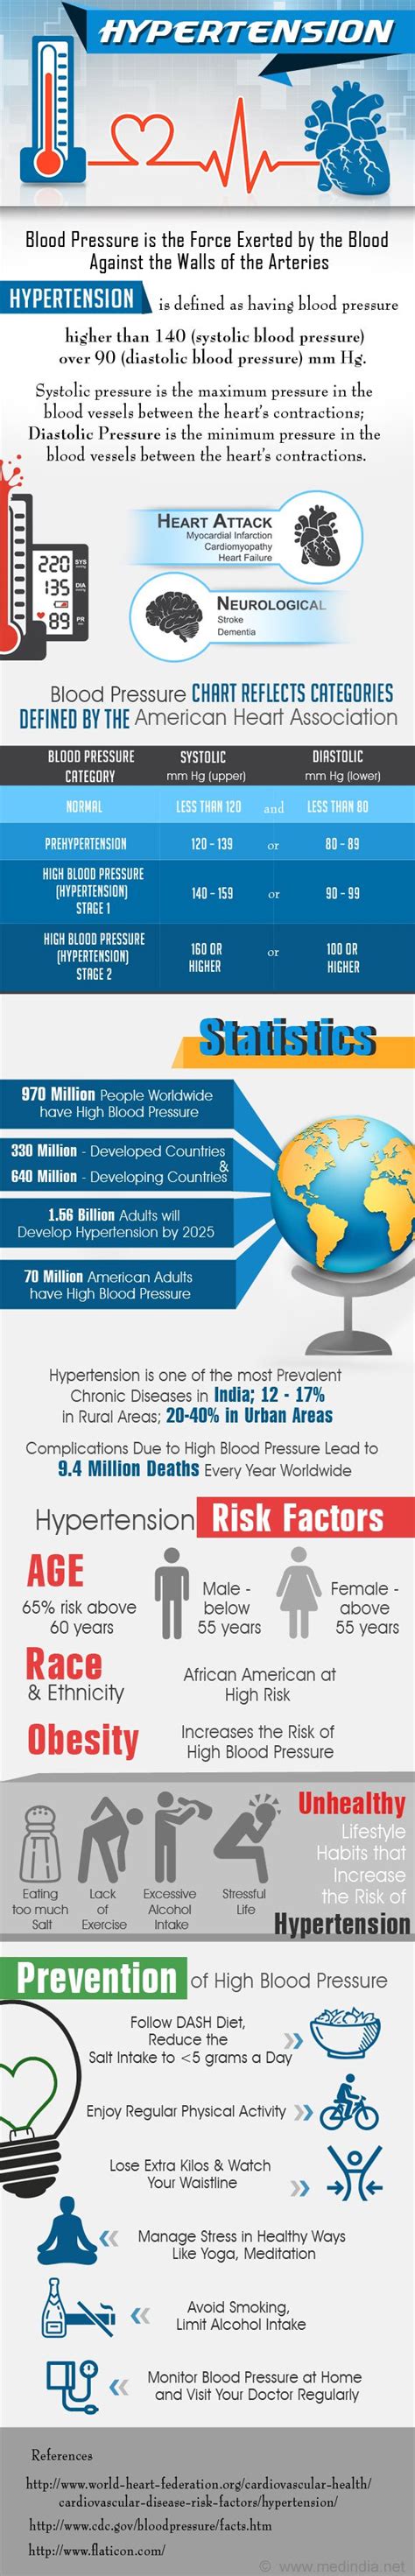 Infographic On Hypertension